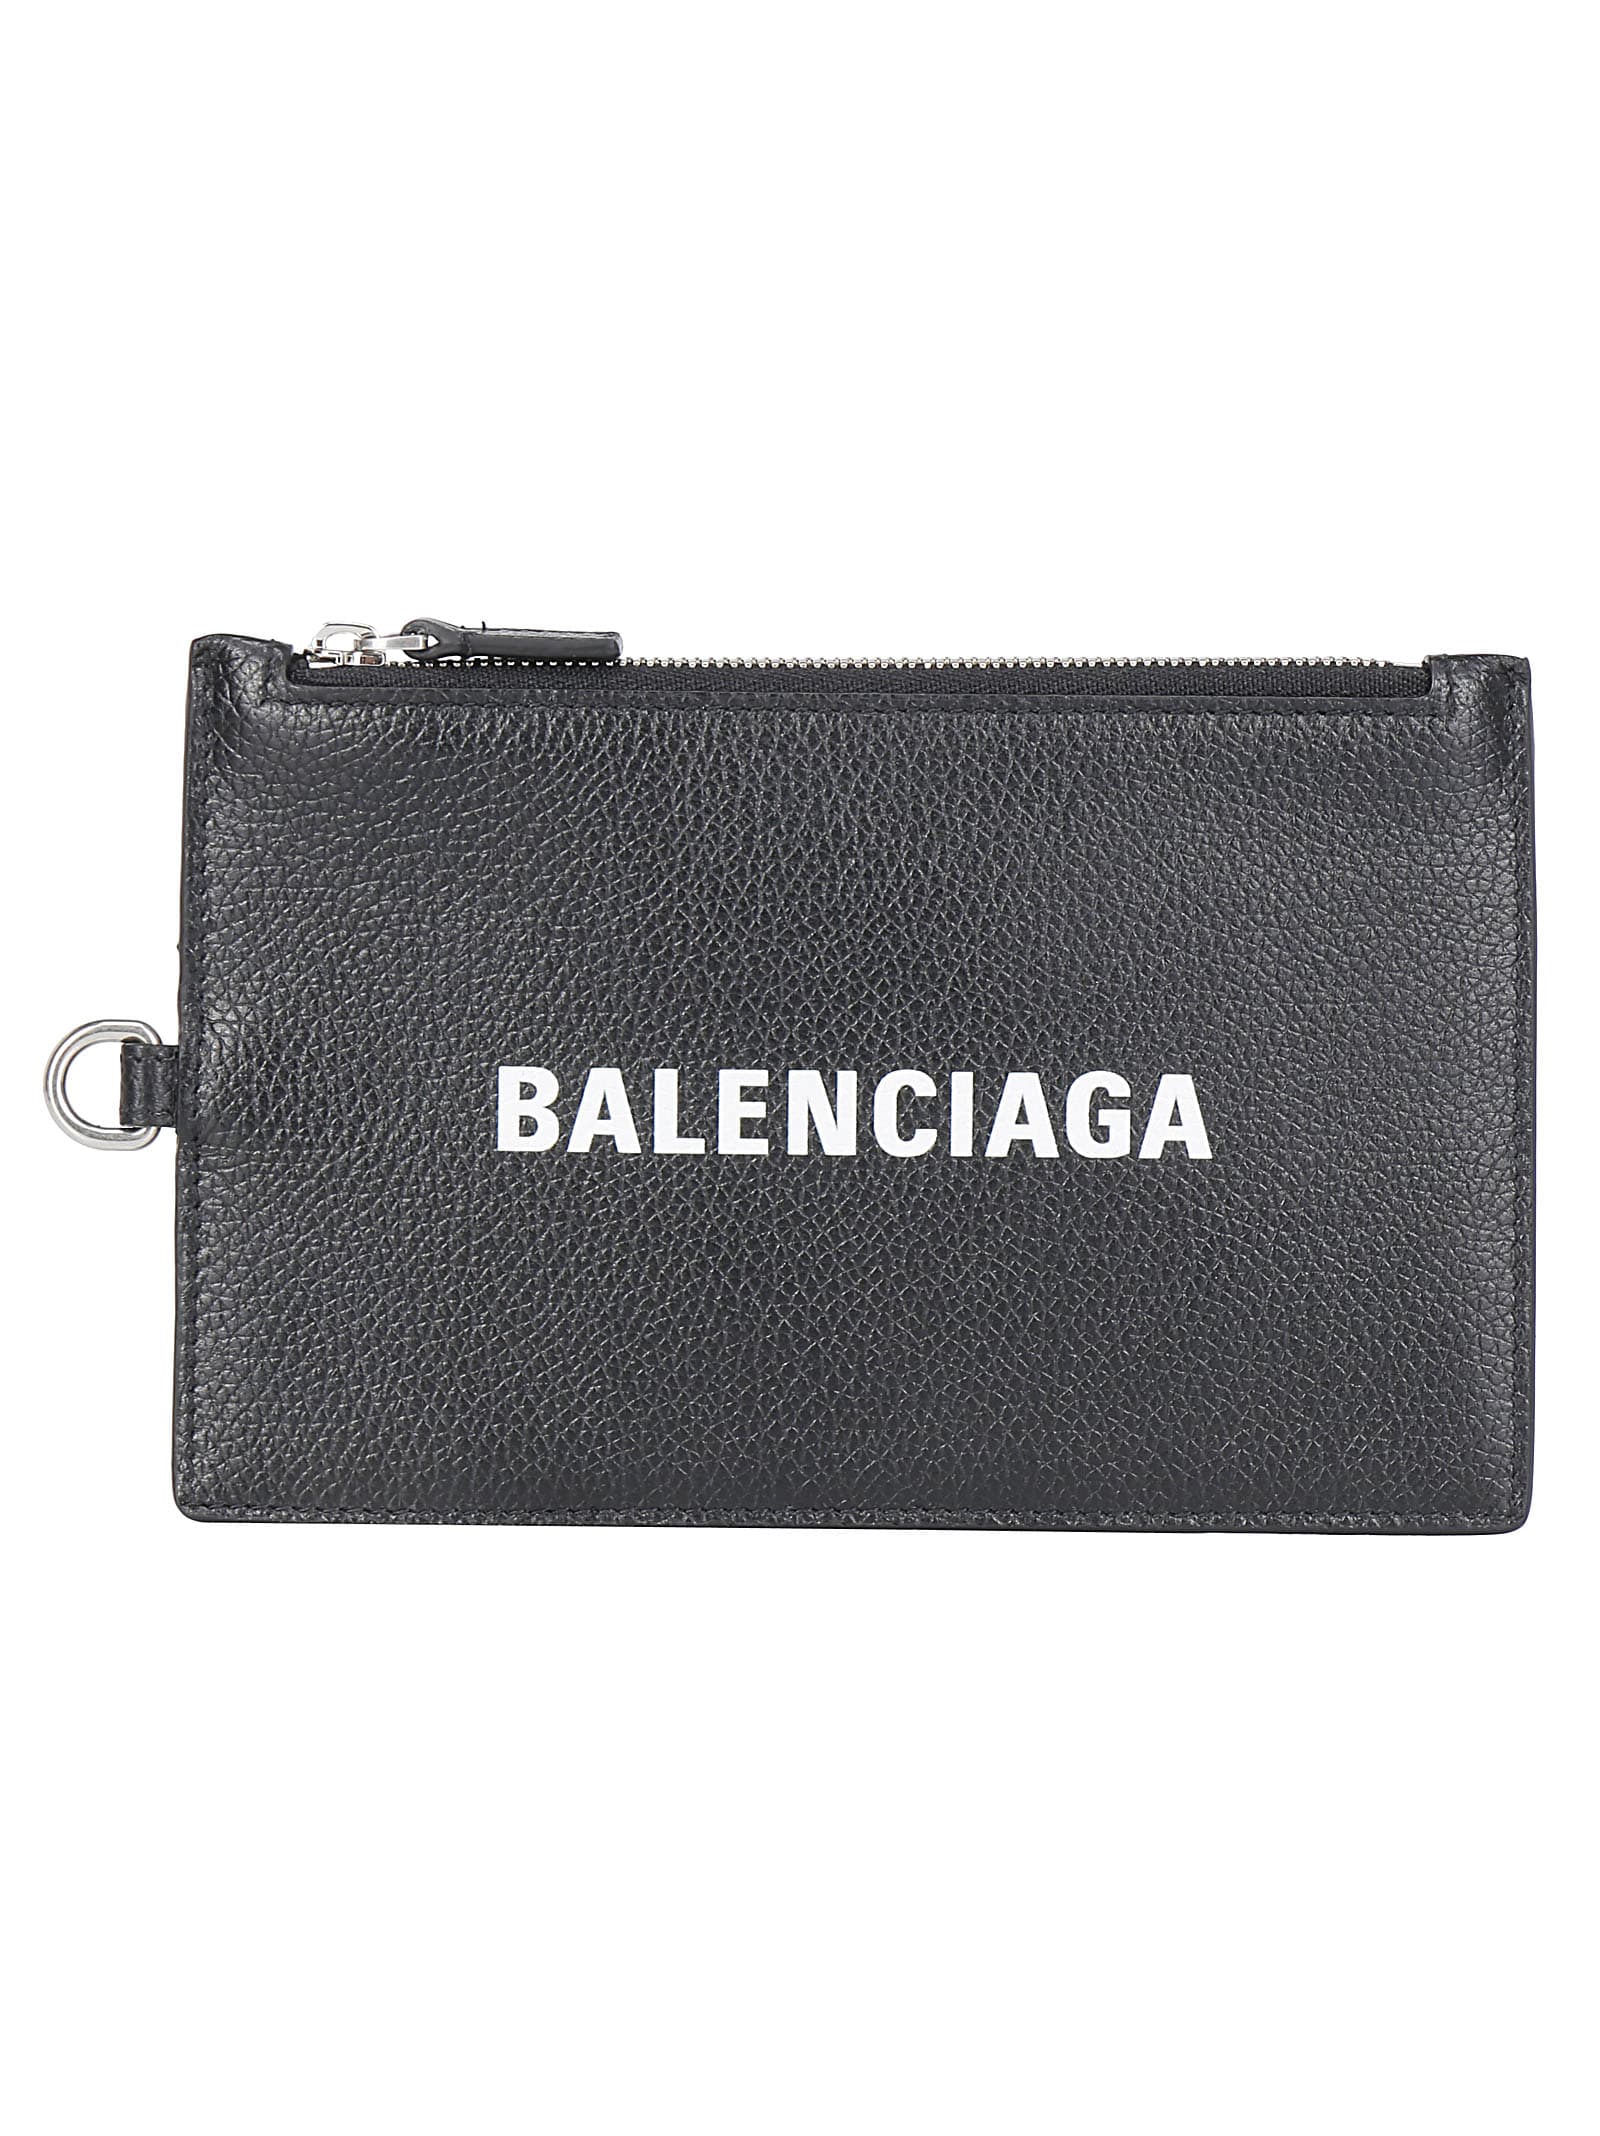 balenciaga wallets sale